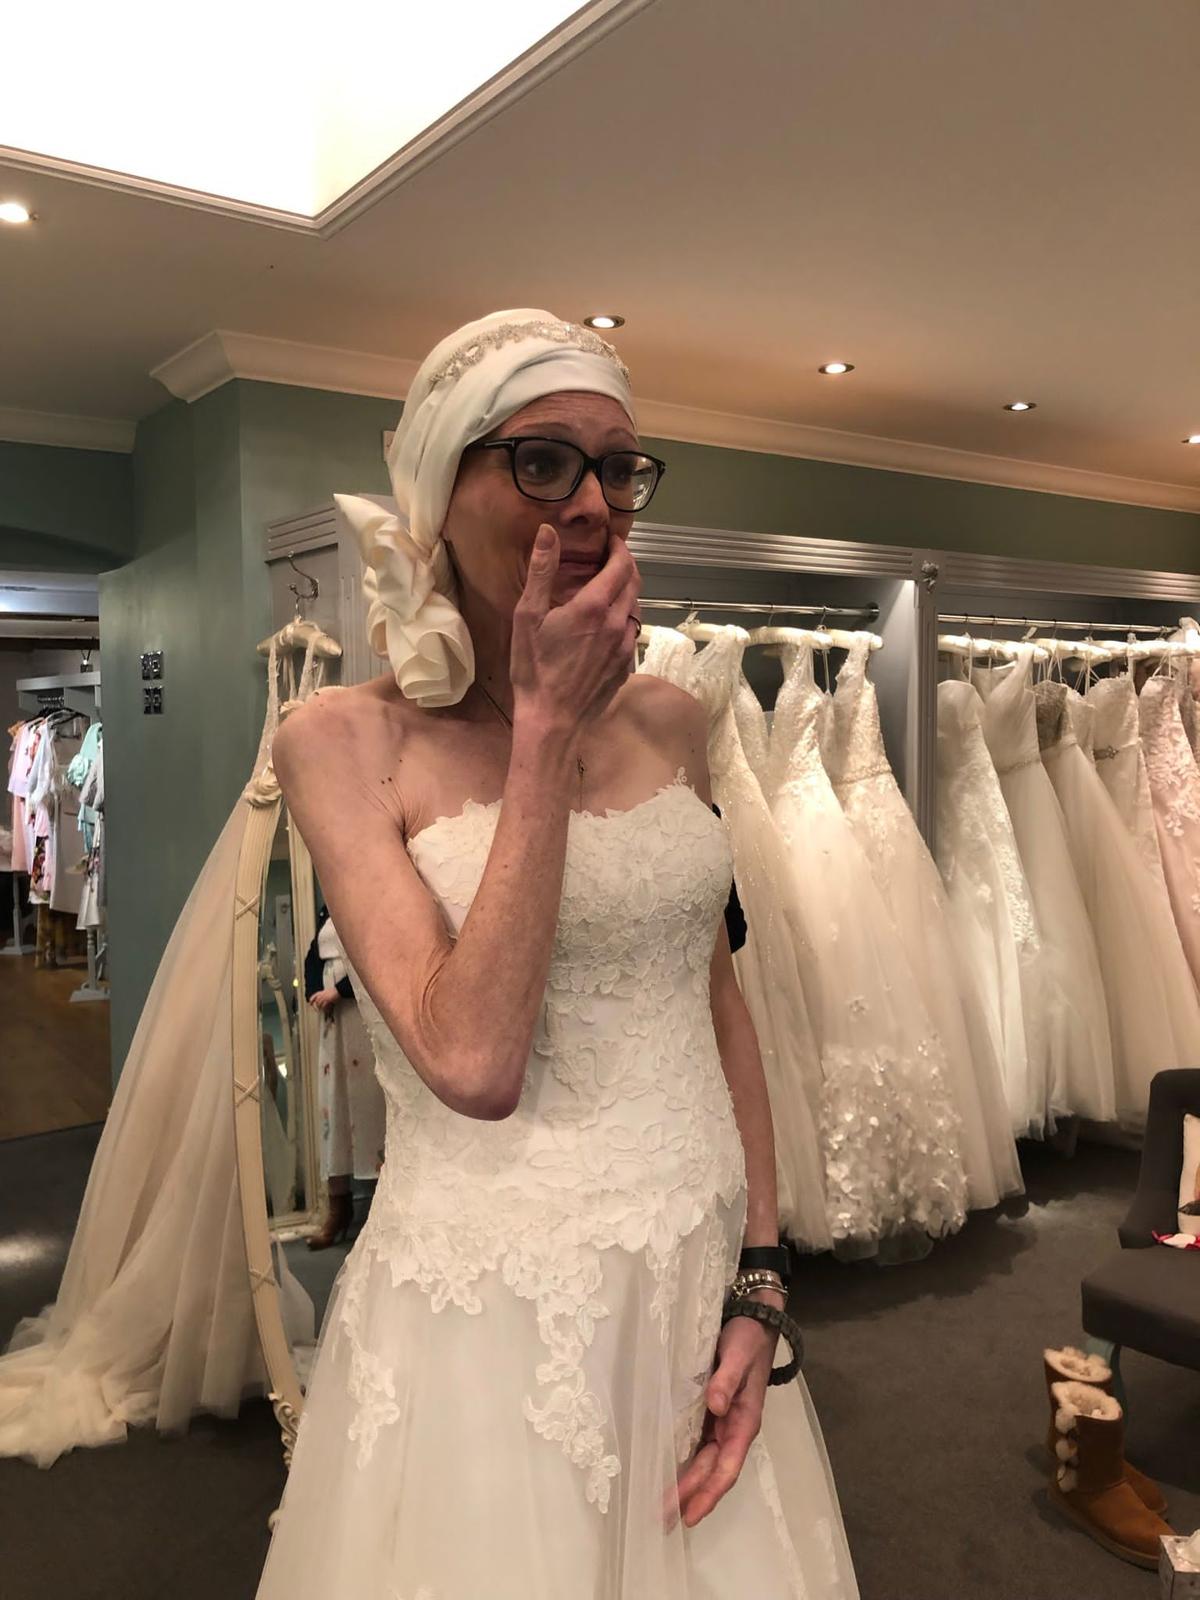 Jen Cooper in her wedding gown. (Courtesy of <a href="https://twitter.com/bcoops_online">Ben Cooper</a>)